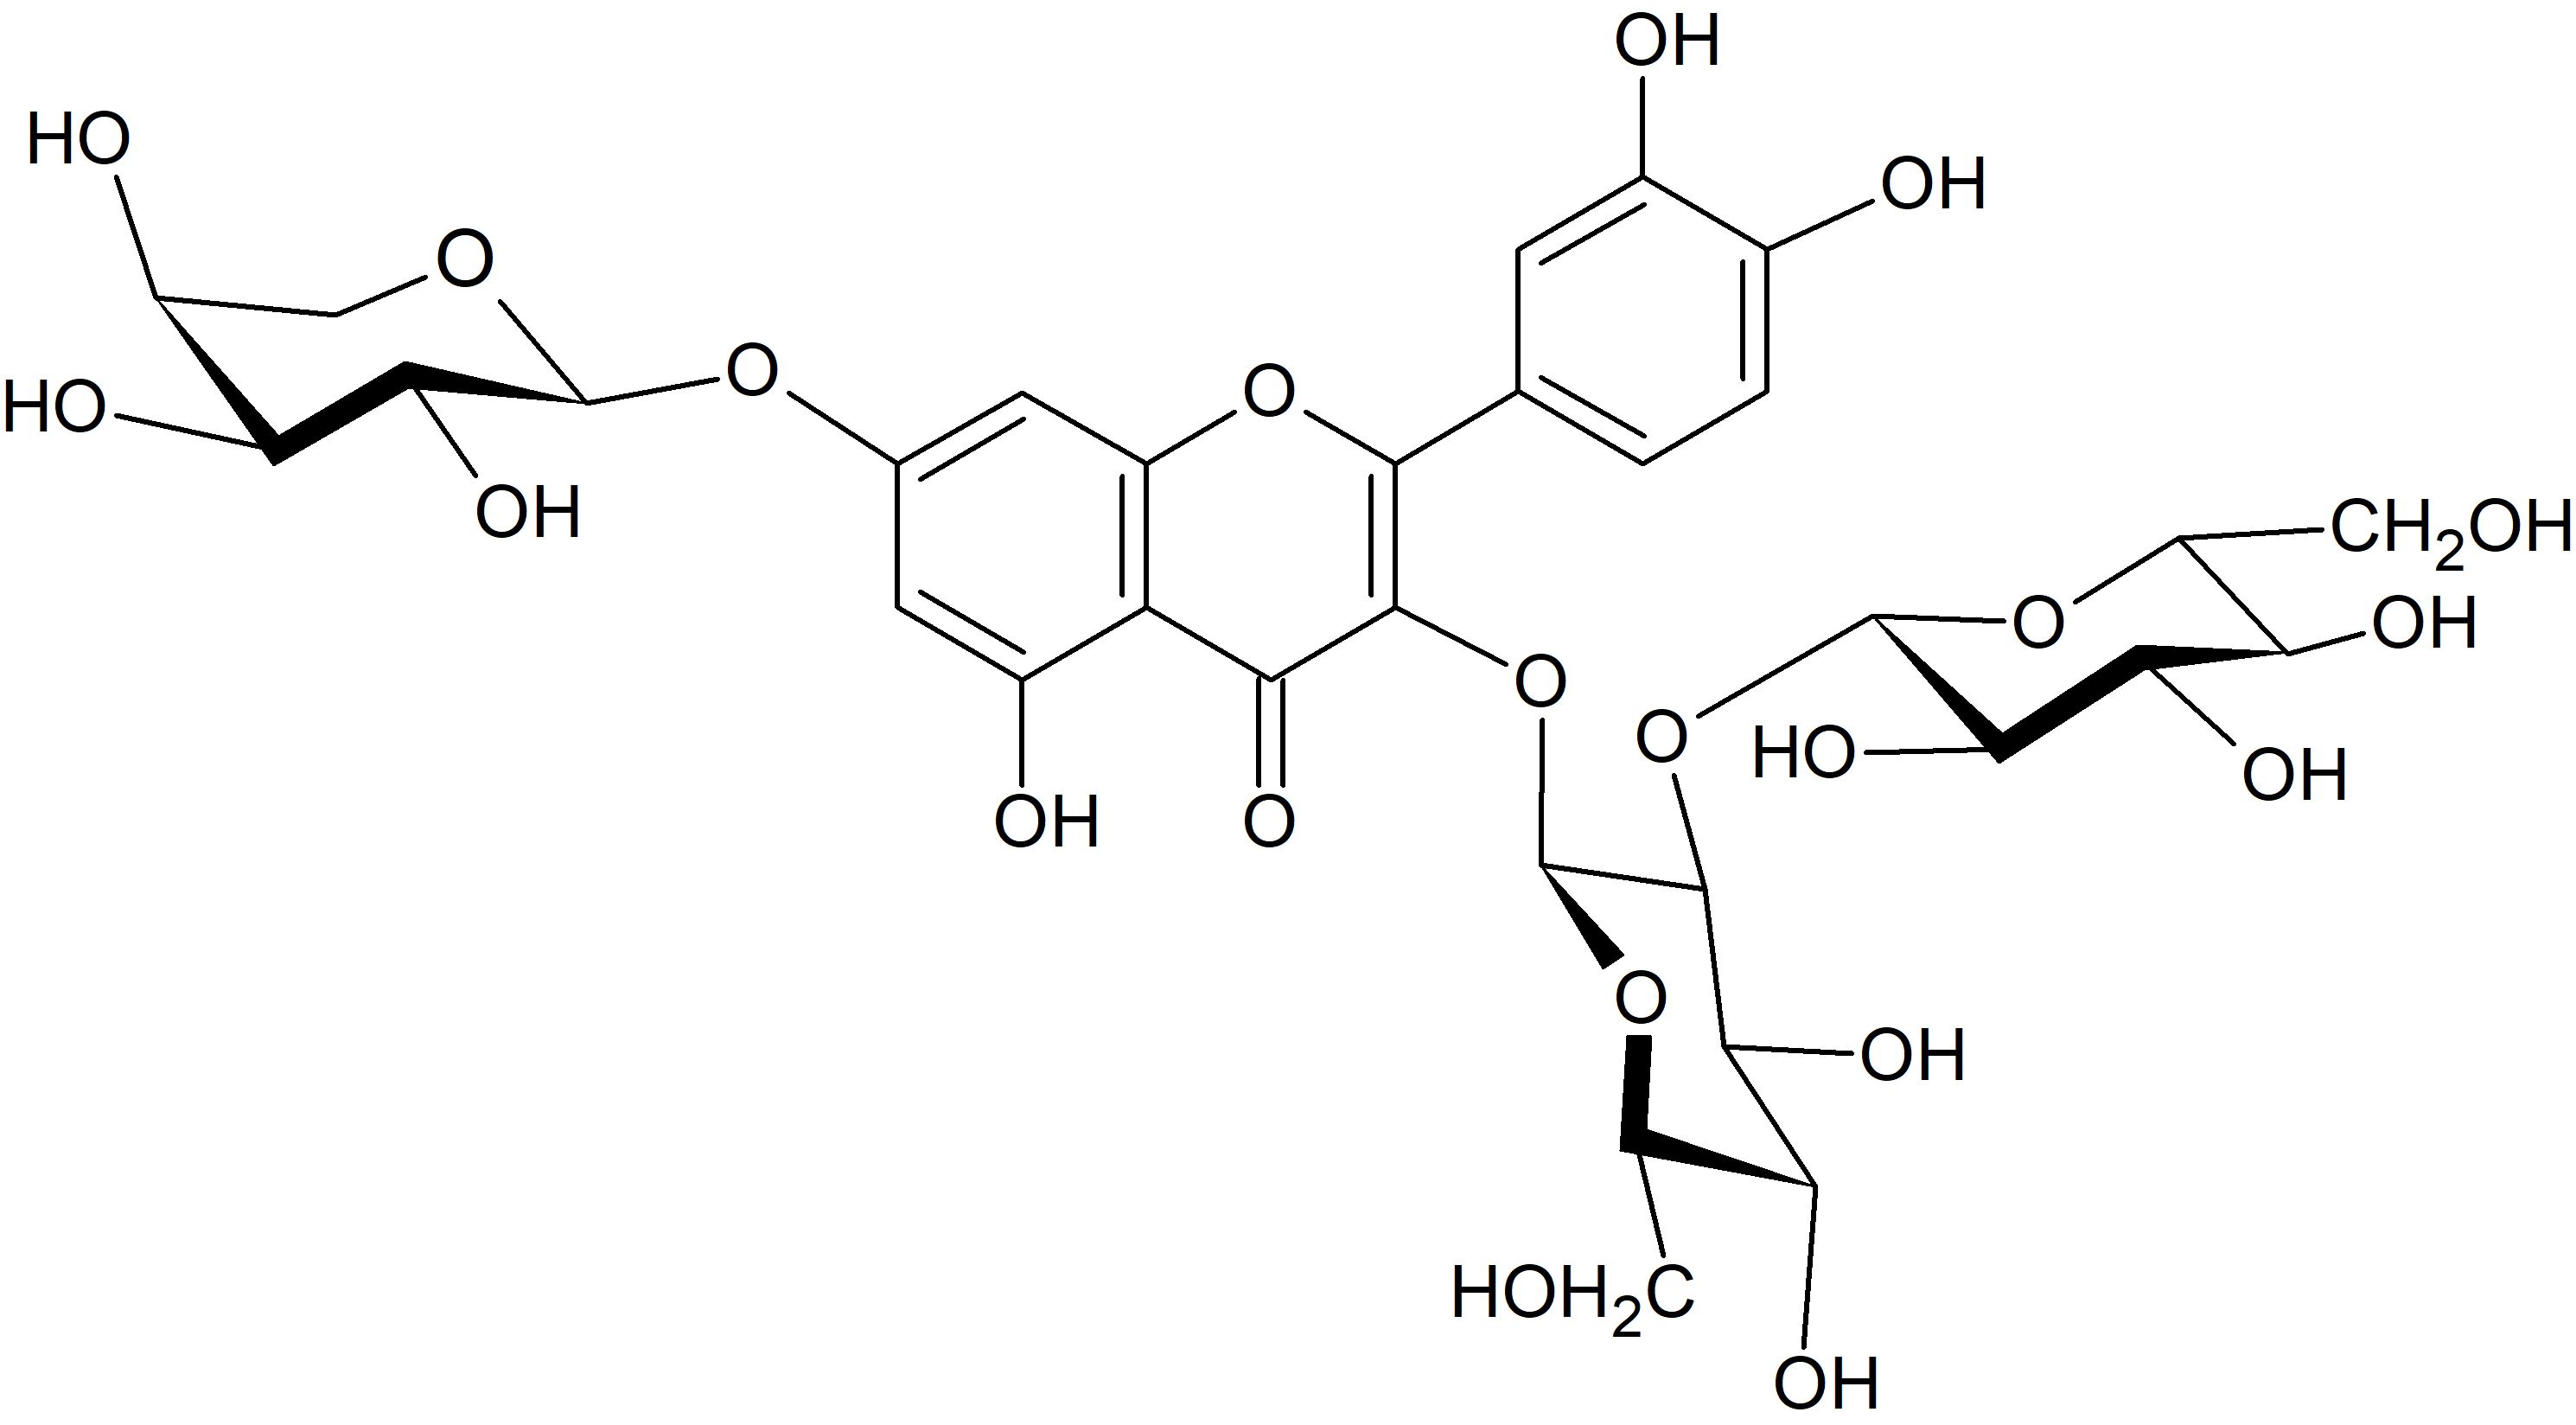 Quercetin 3-O-sophoroside-7-O-arabinoside